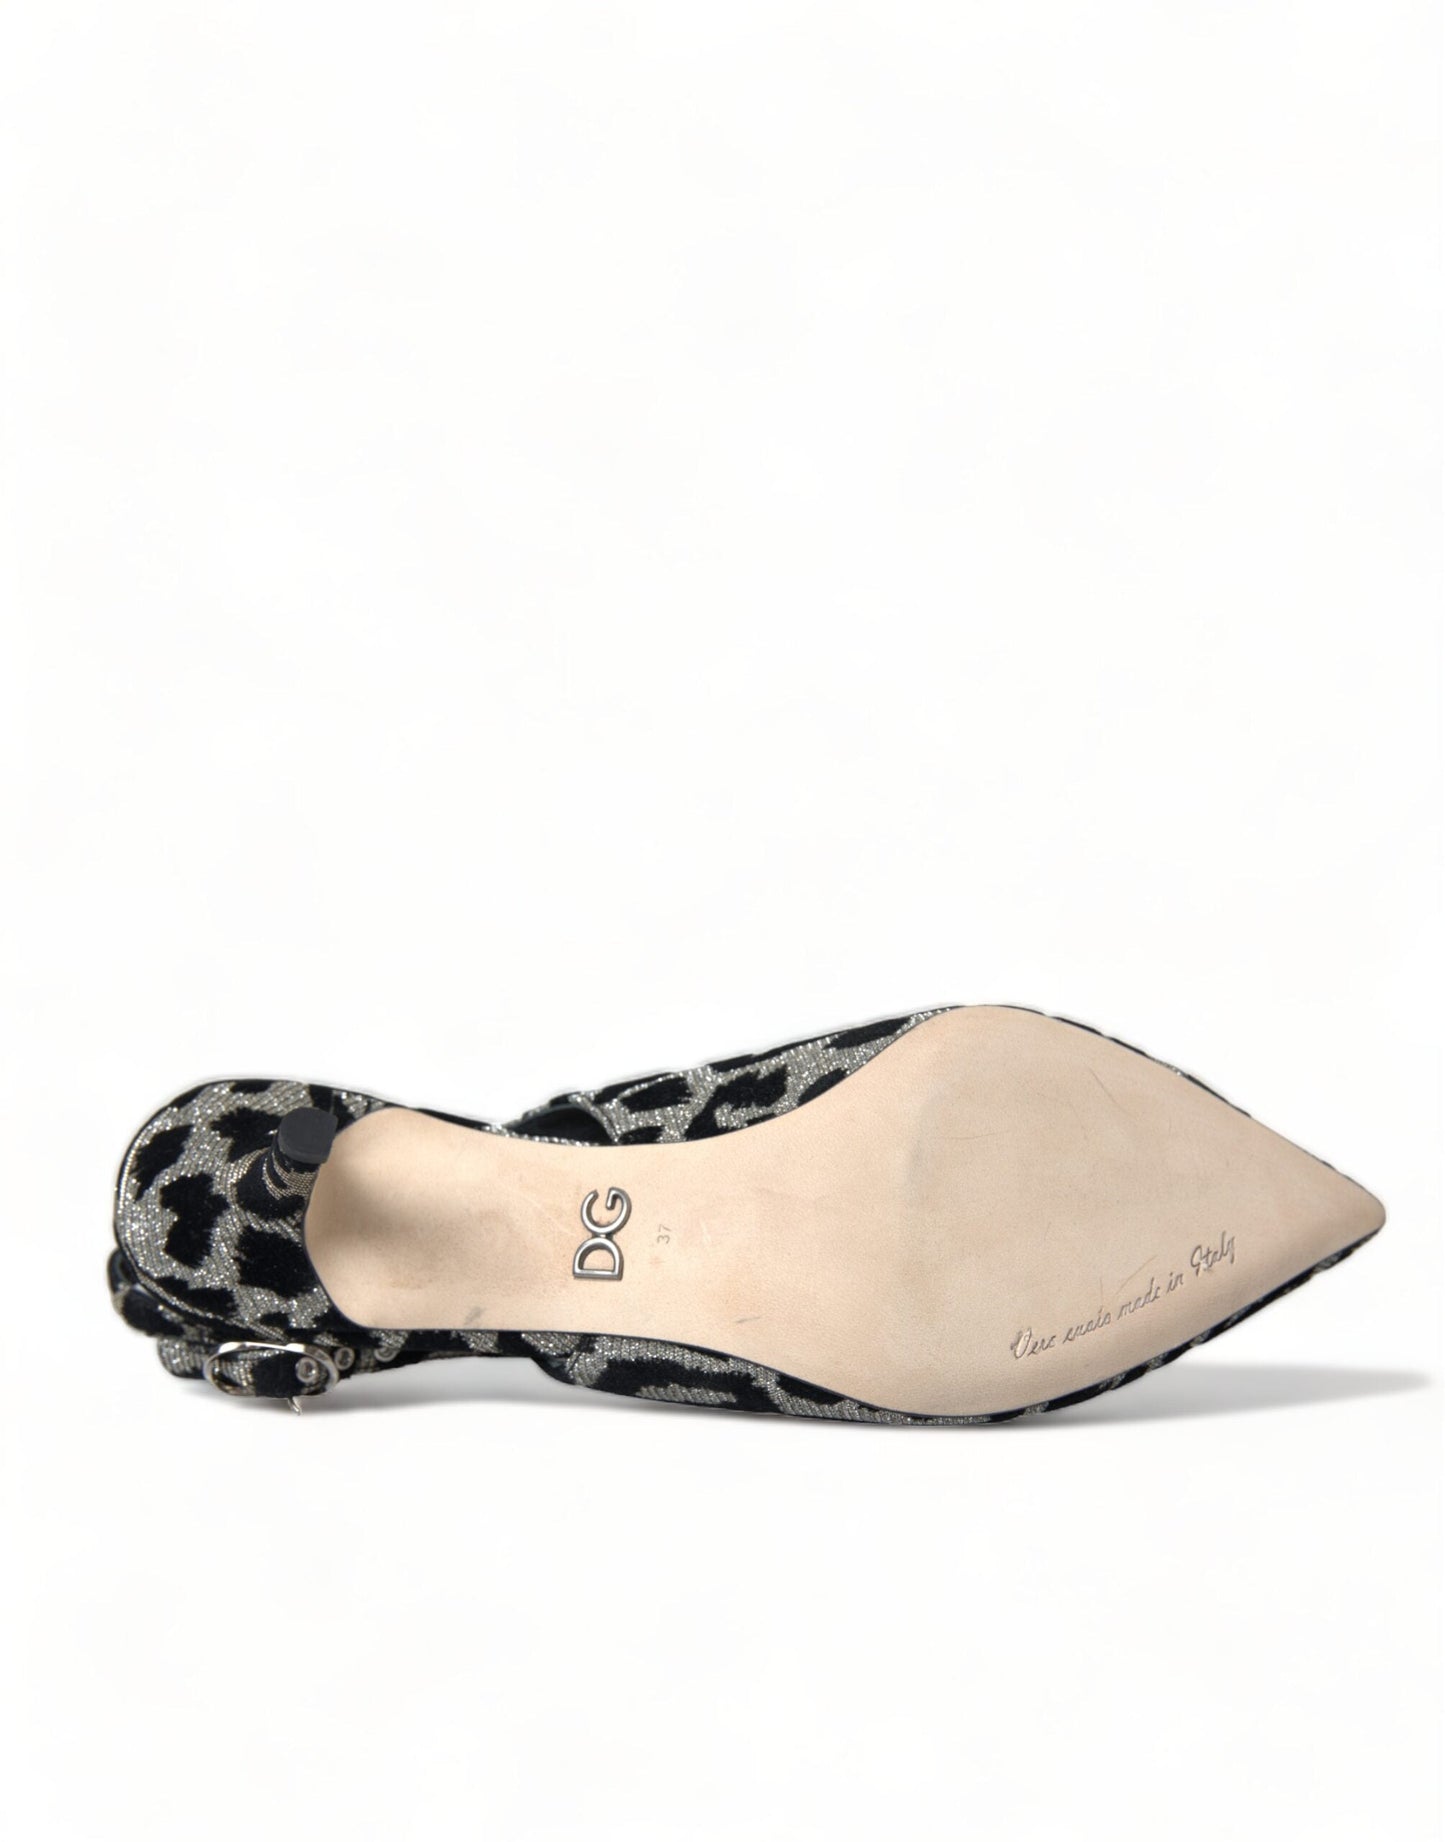 Dolce & Gabbana Silver Leopard Crystal Slingback Pumps Shoes | Fashionsarah.com